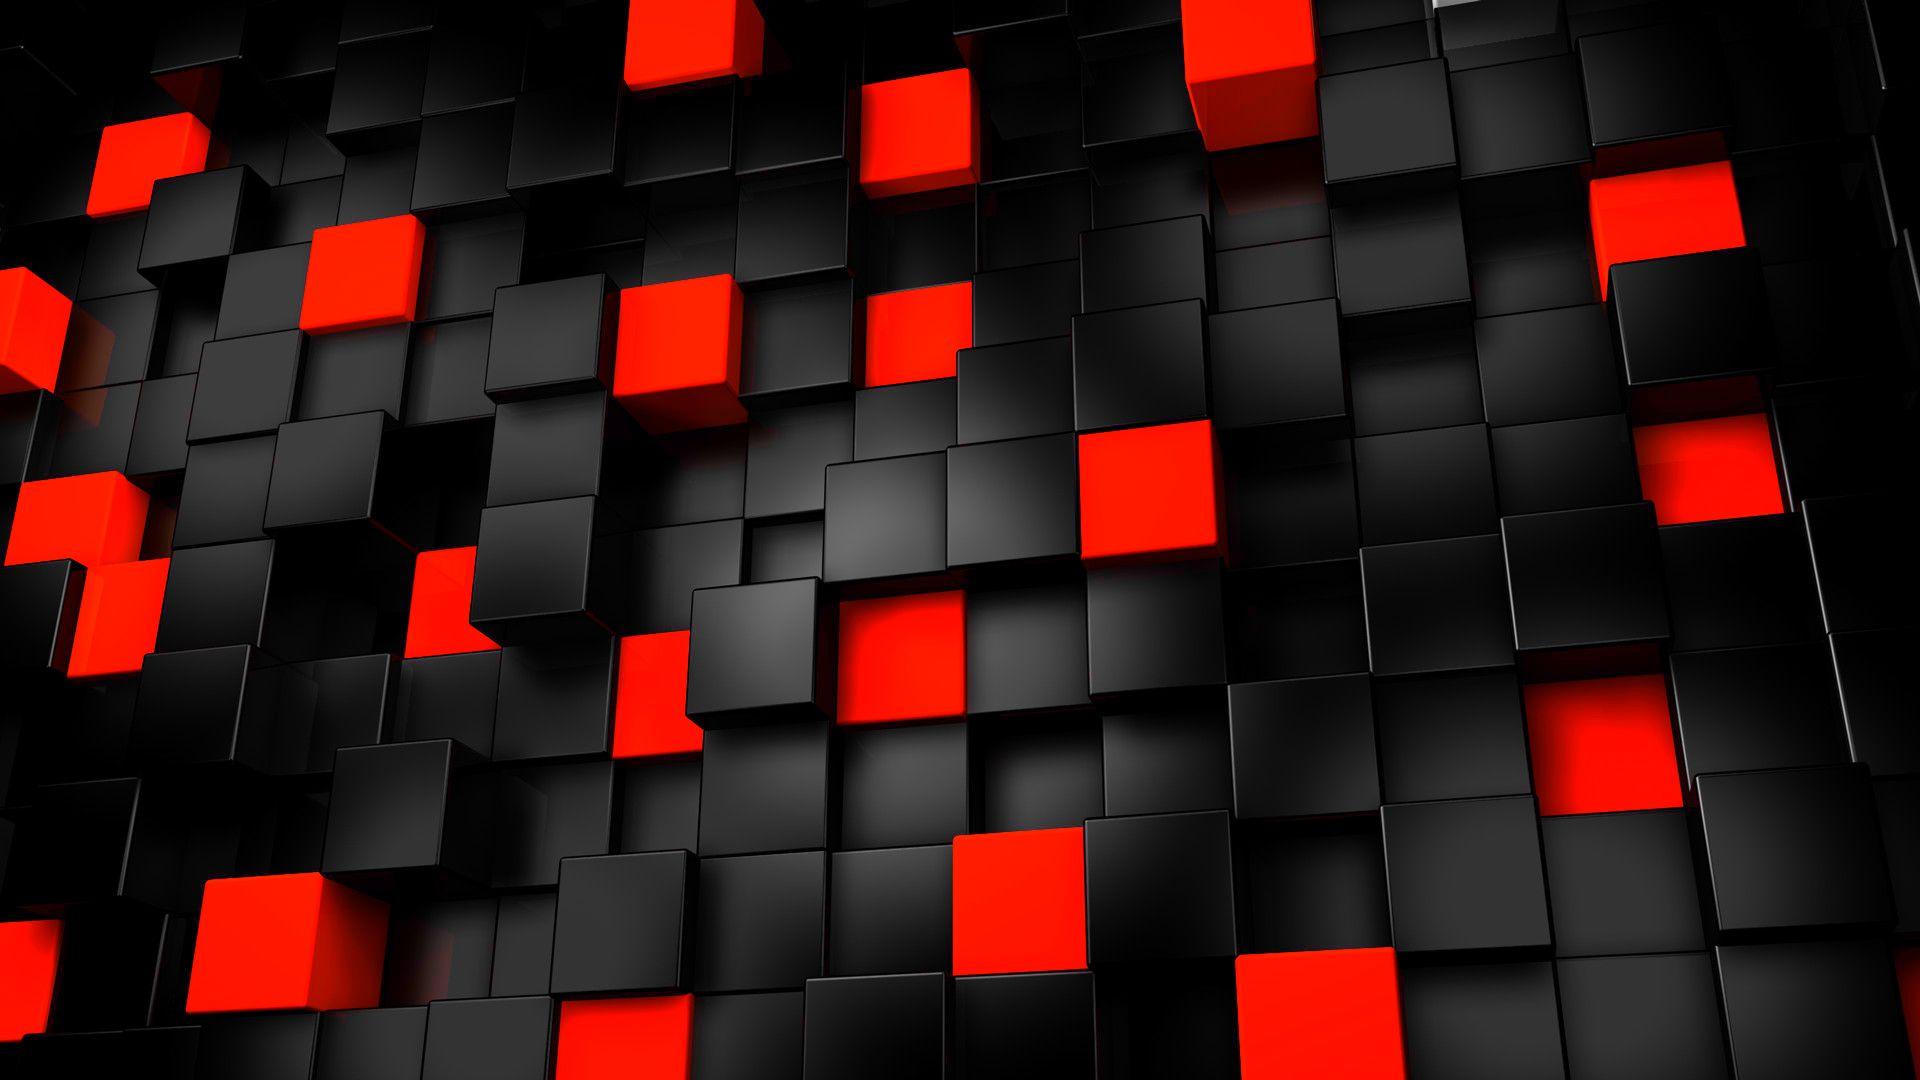 Best Red And Black Wallpaper HD Image Desktop For Mobile Of